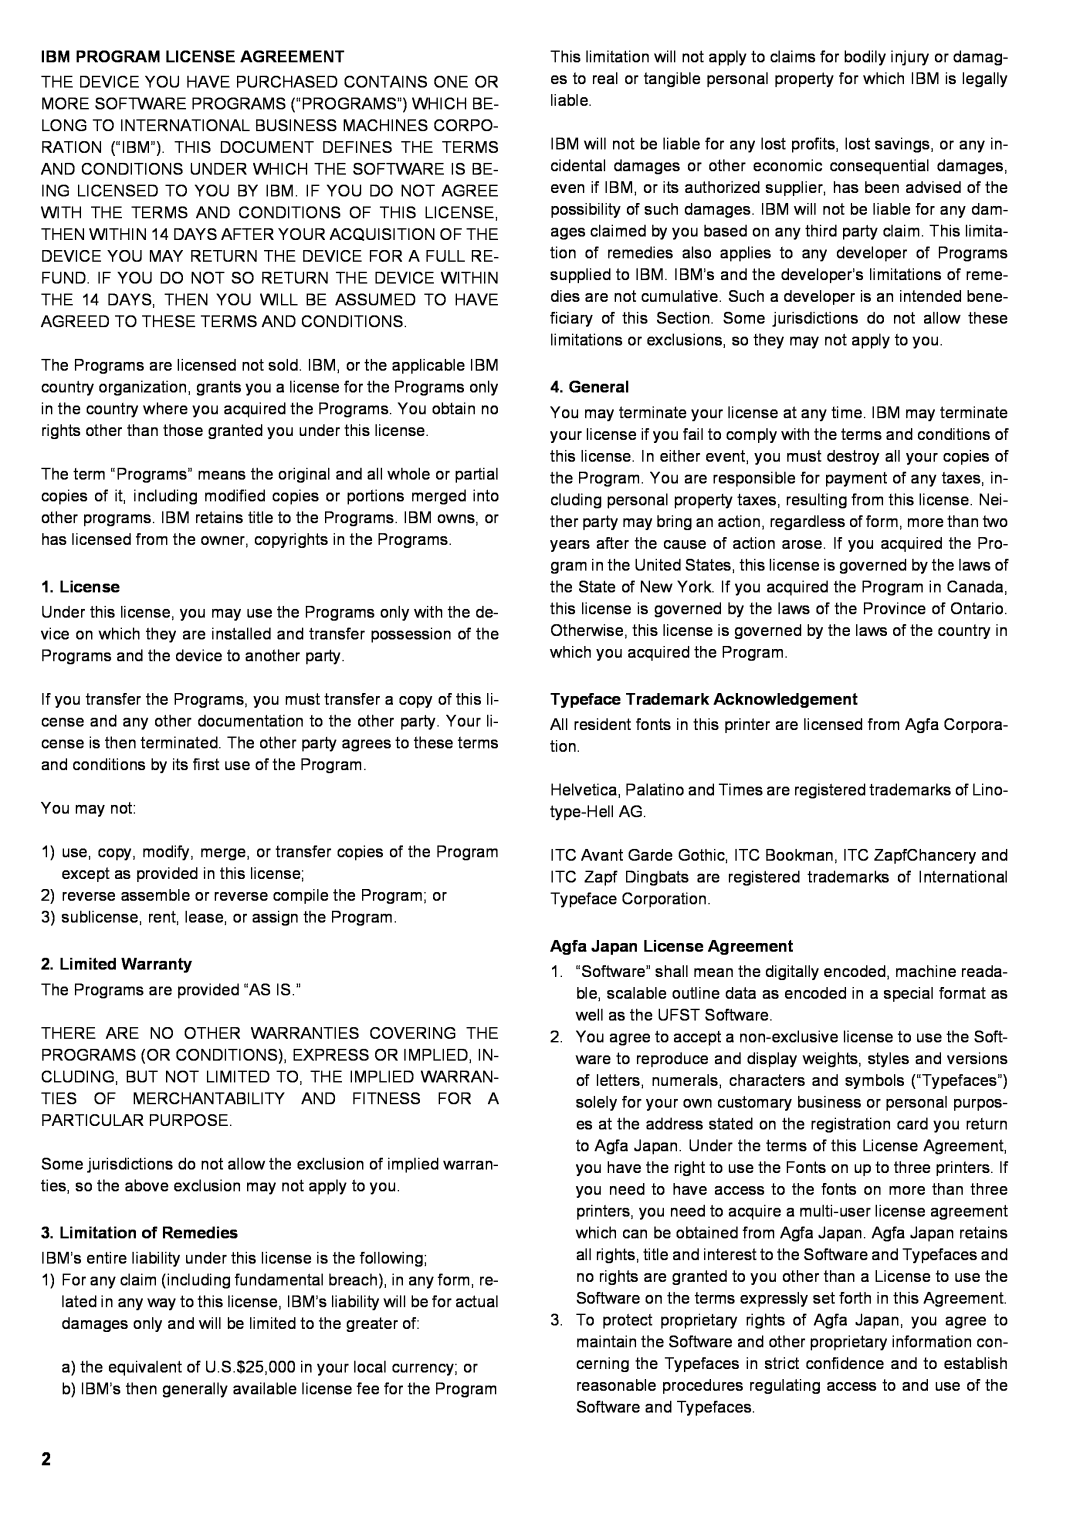 Kyocera S-9100DN manual Ibm Program License Agreement, Limited Warranty, Limitation of Remedies, General 